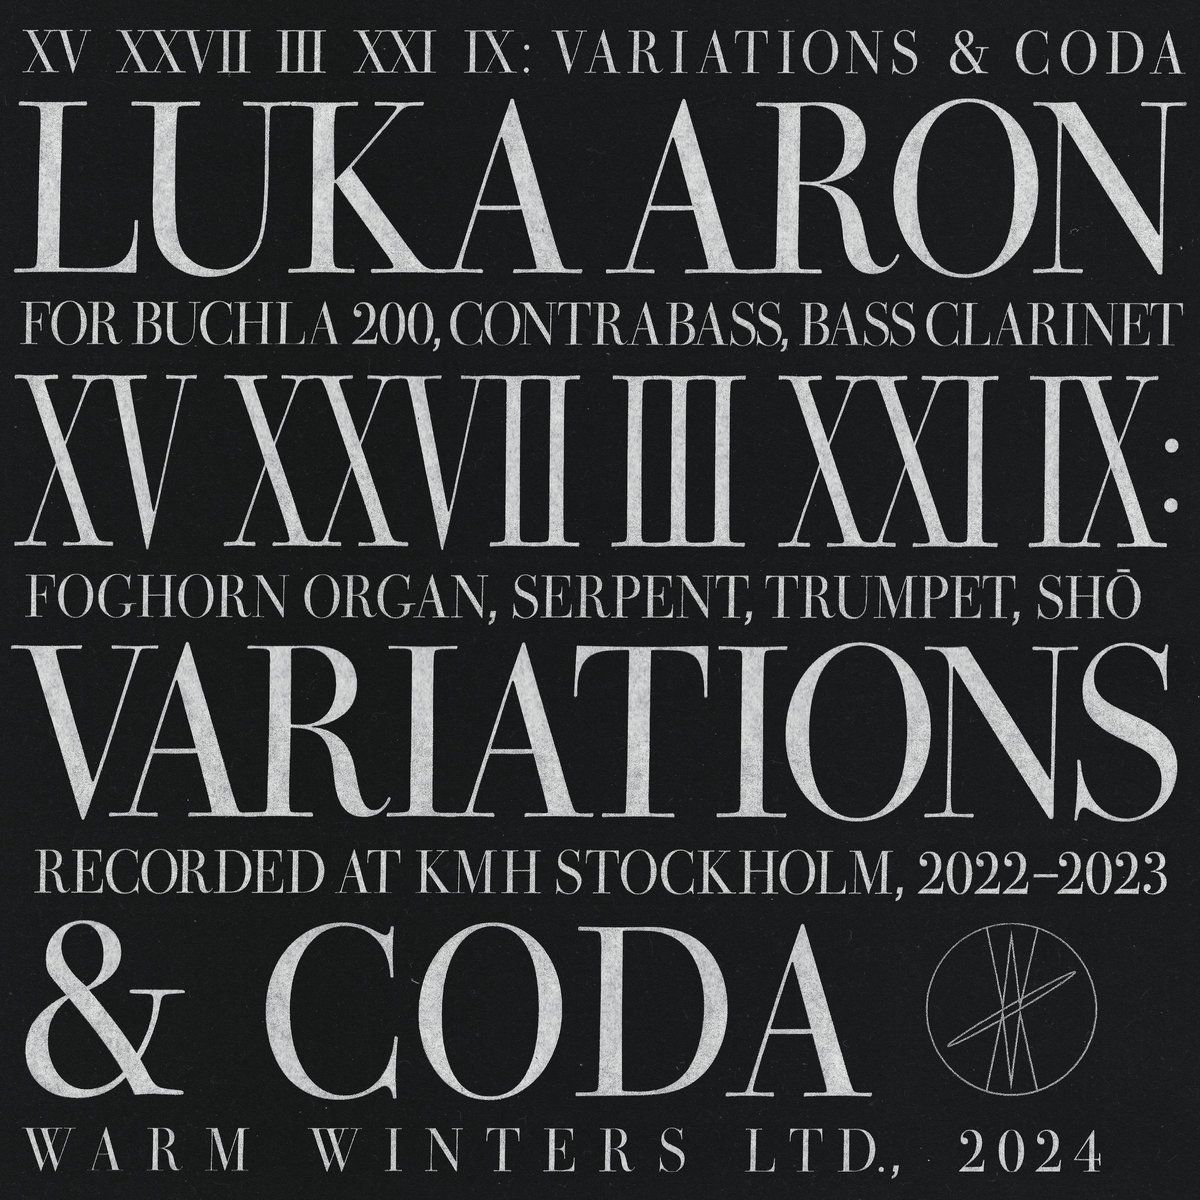 LUKA ARON / XV XXVII III XXI IX: VARIATIONS & CODA